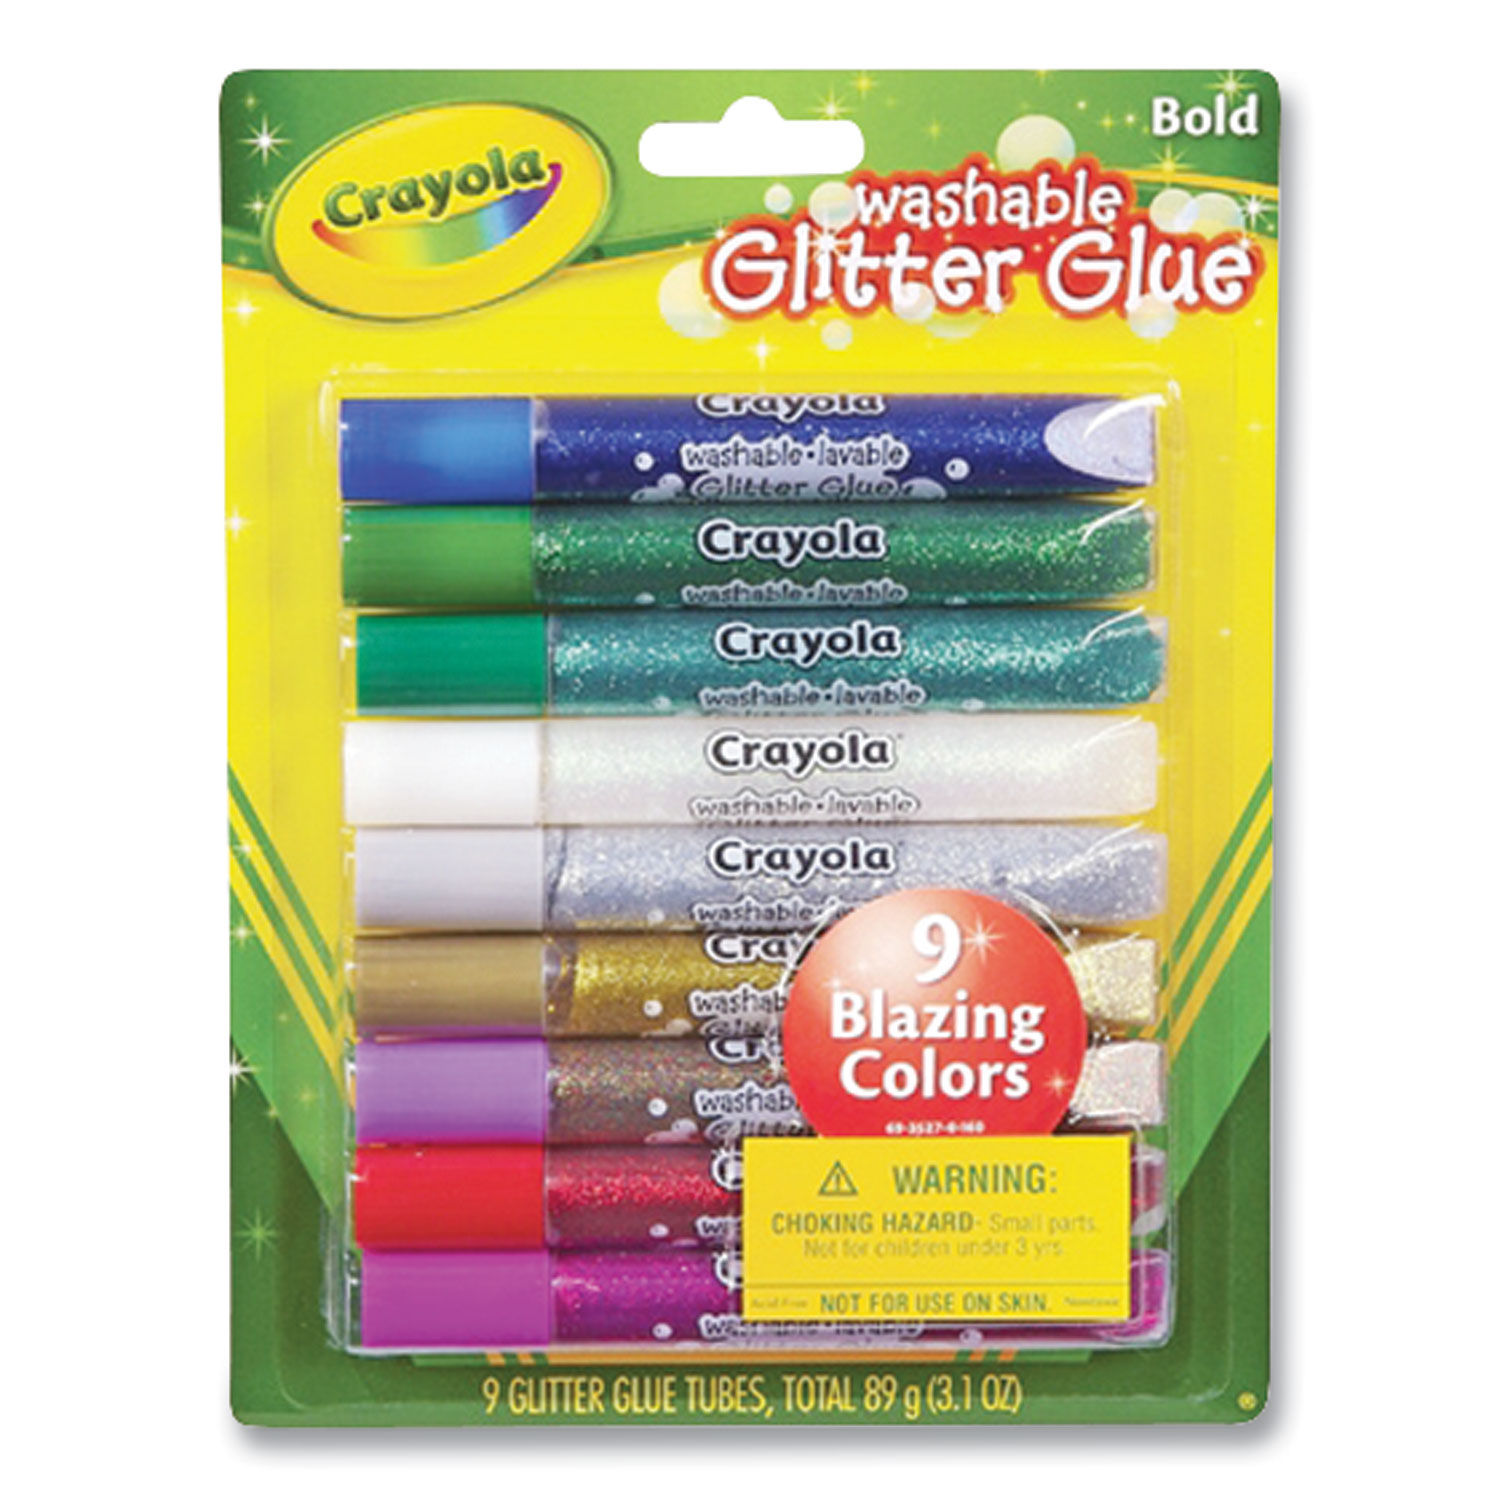 Crayola Paint and Elmer's Glitter Glue $3.97